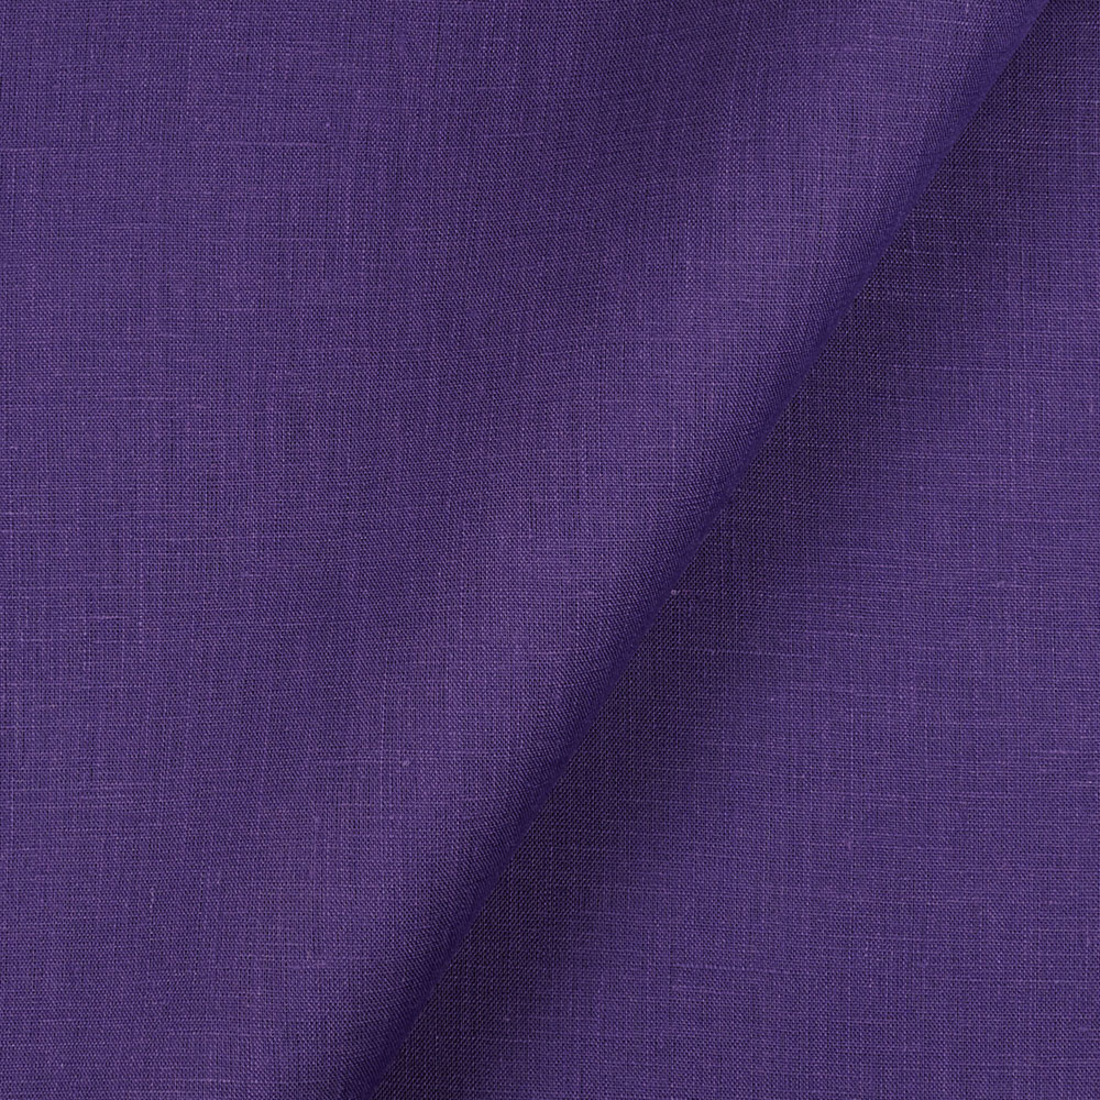 Fabric IL020 Handkerchief 100% Linen Fabric Fiesta Marina Softened